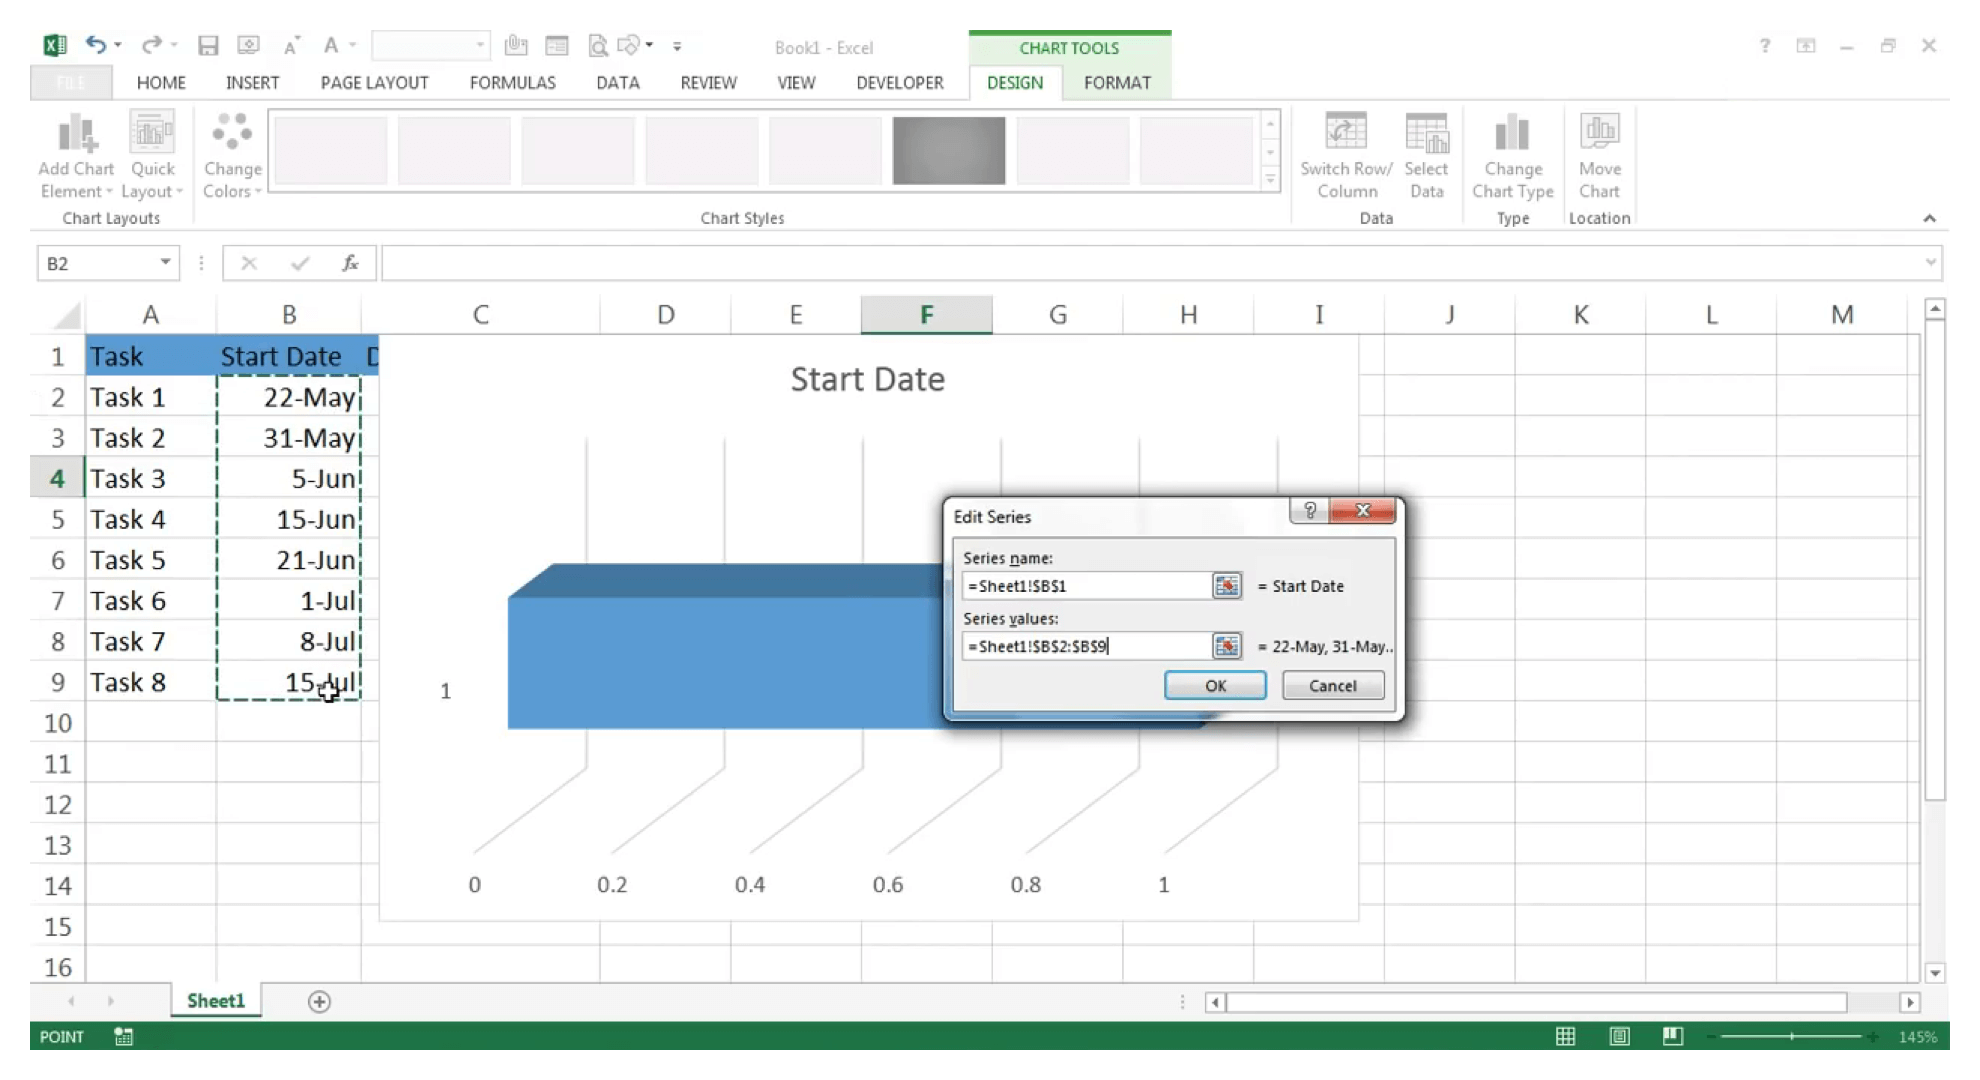 Gantt Chart in Excel